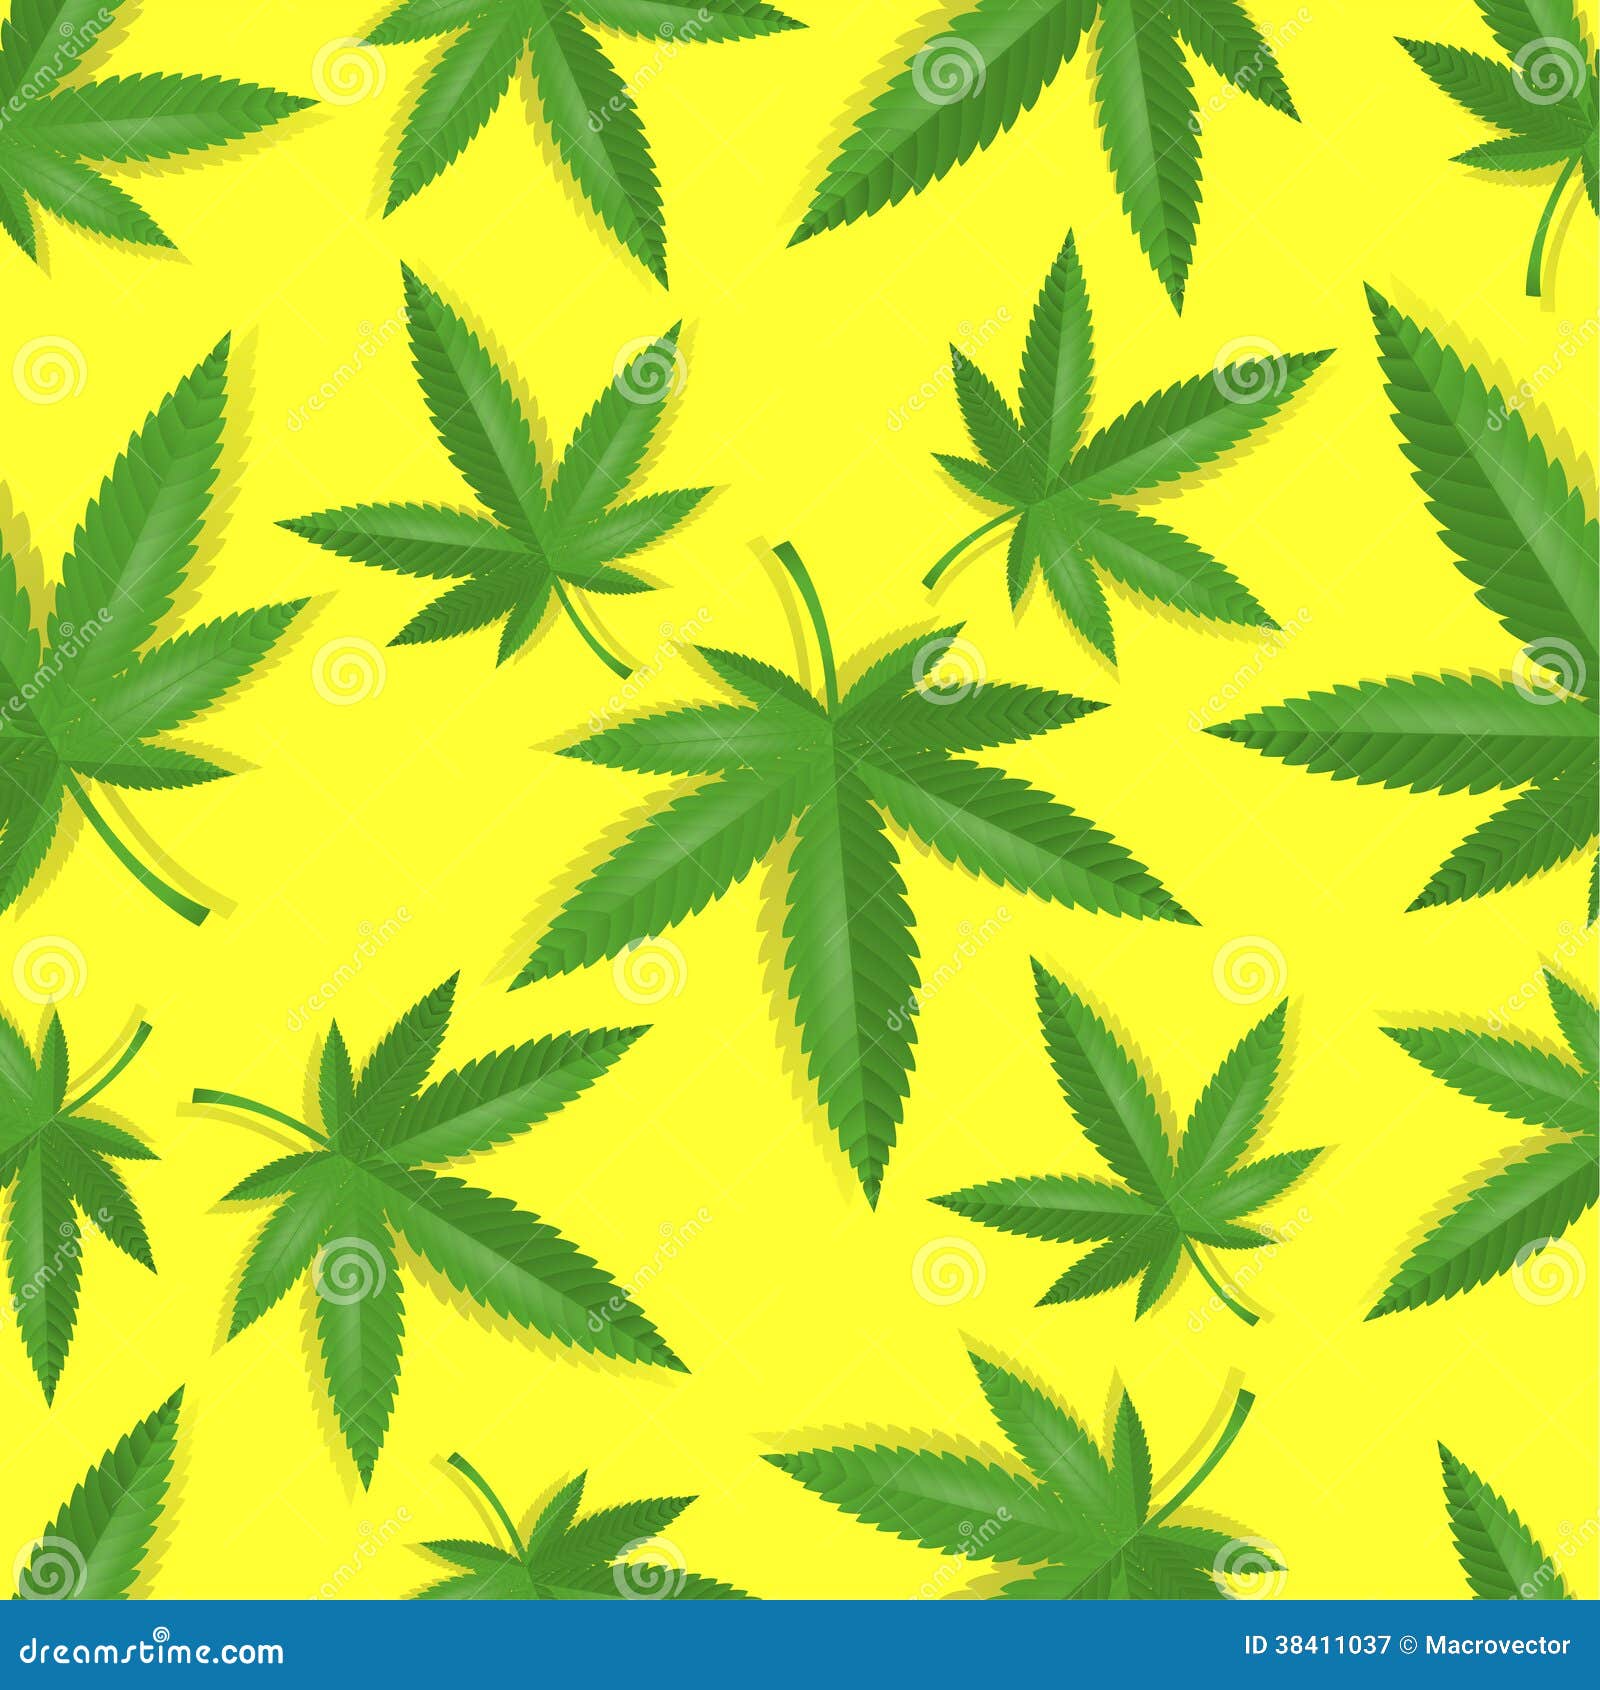 Картина марихуана настройки tor browser гидра